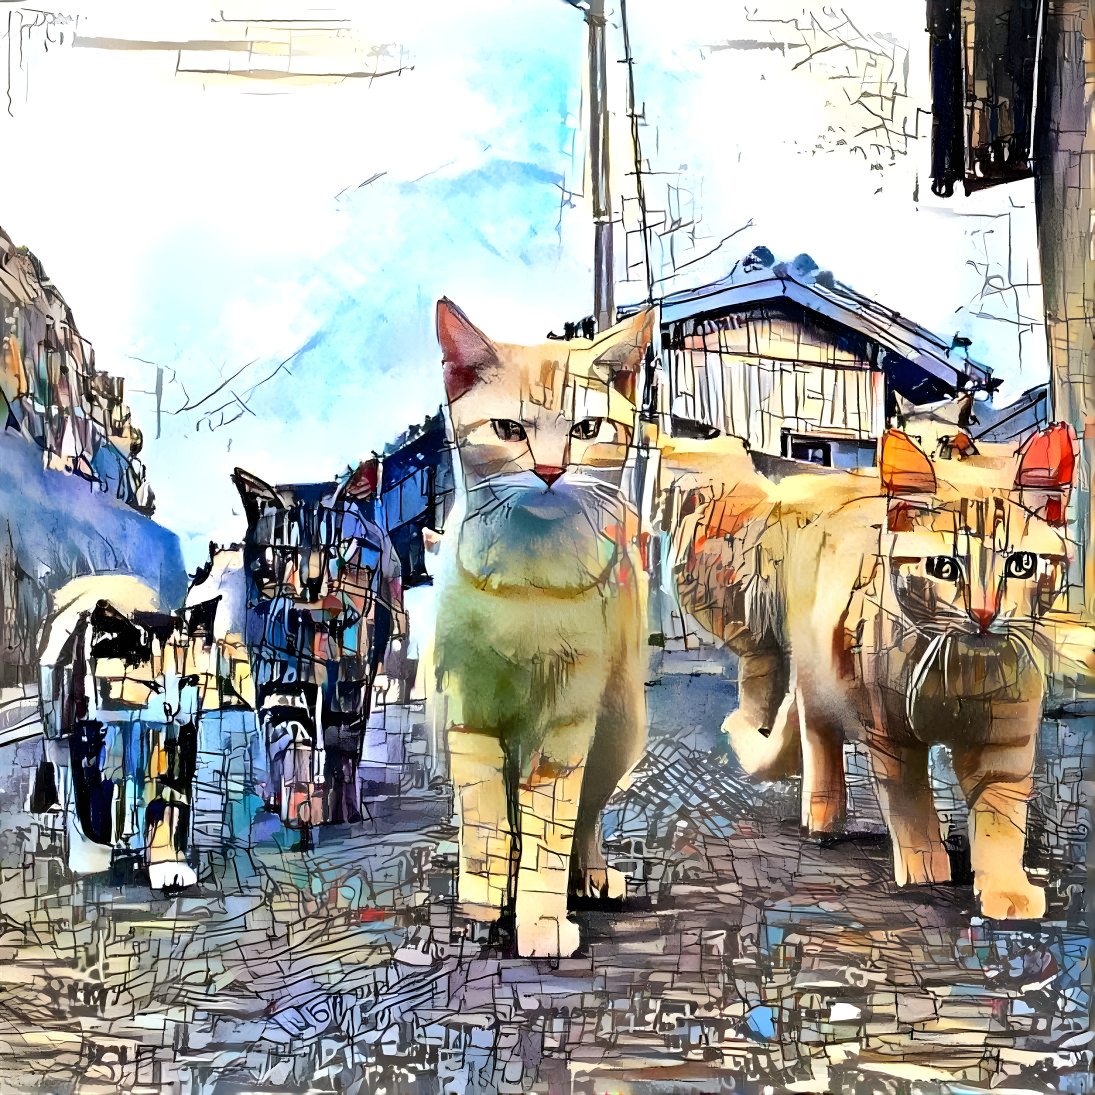 Cat Gang